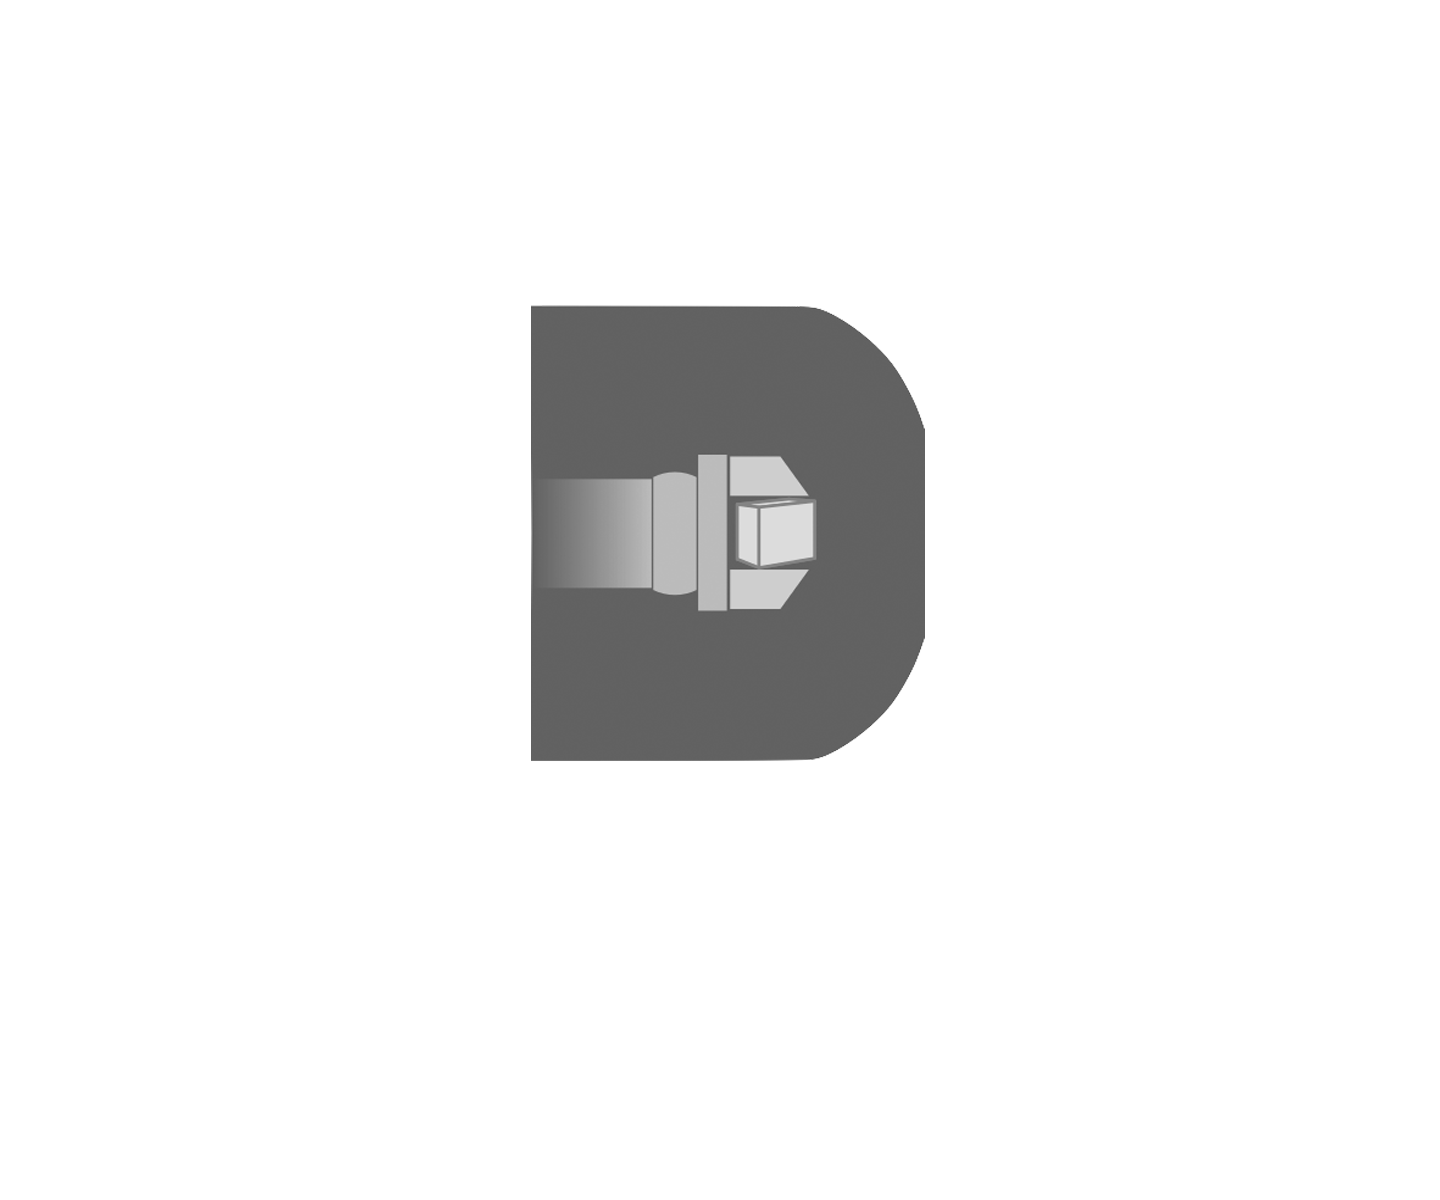 Dexterity Robotics